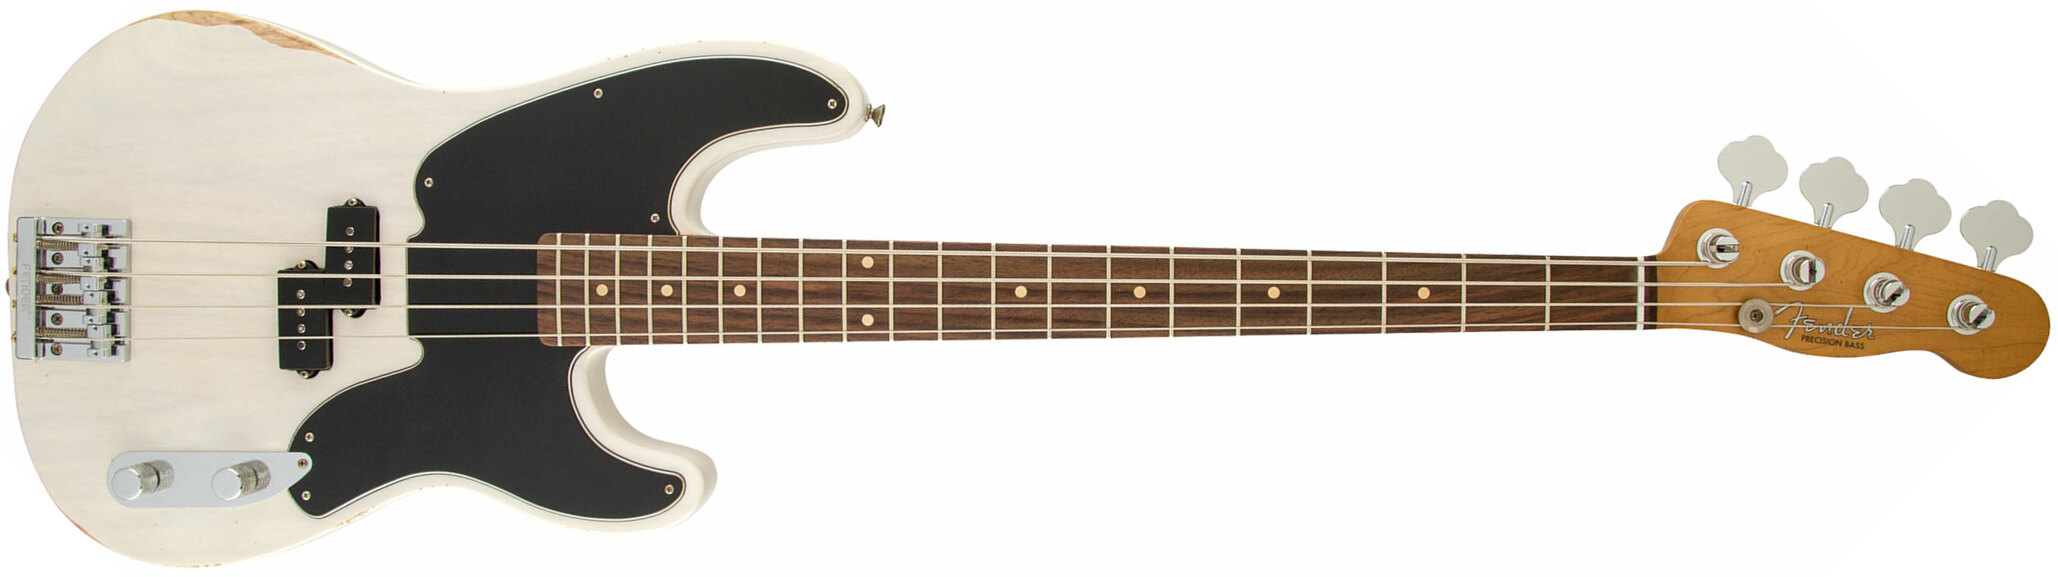 Fender Mike Dirnt Precision Bass Mex Signature Rw - White Blonde - Solid body elektrische bas - Main picture